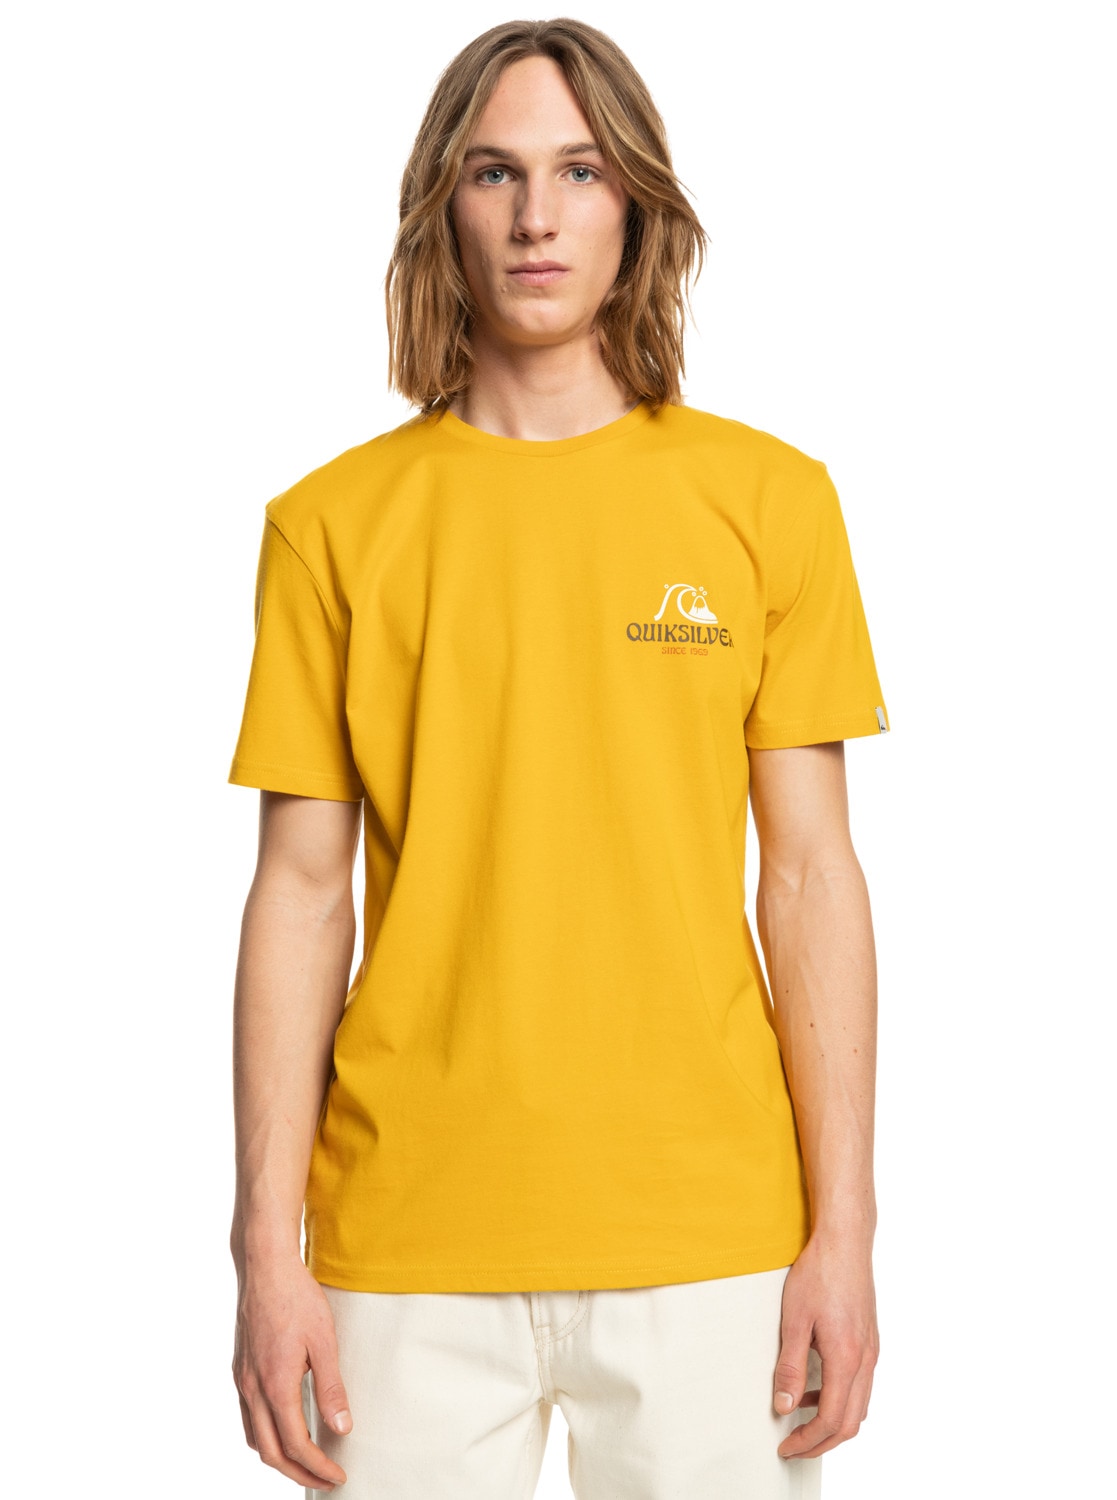 Quiksilver T-Shirt »Dream Voucher« von Quiksilver